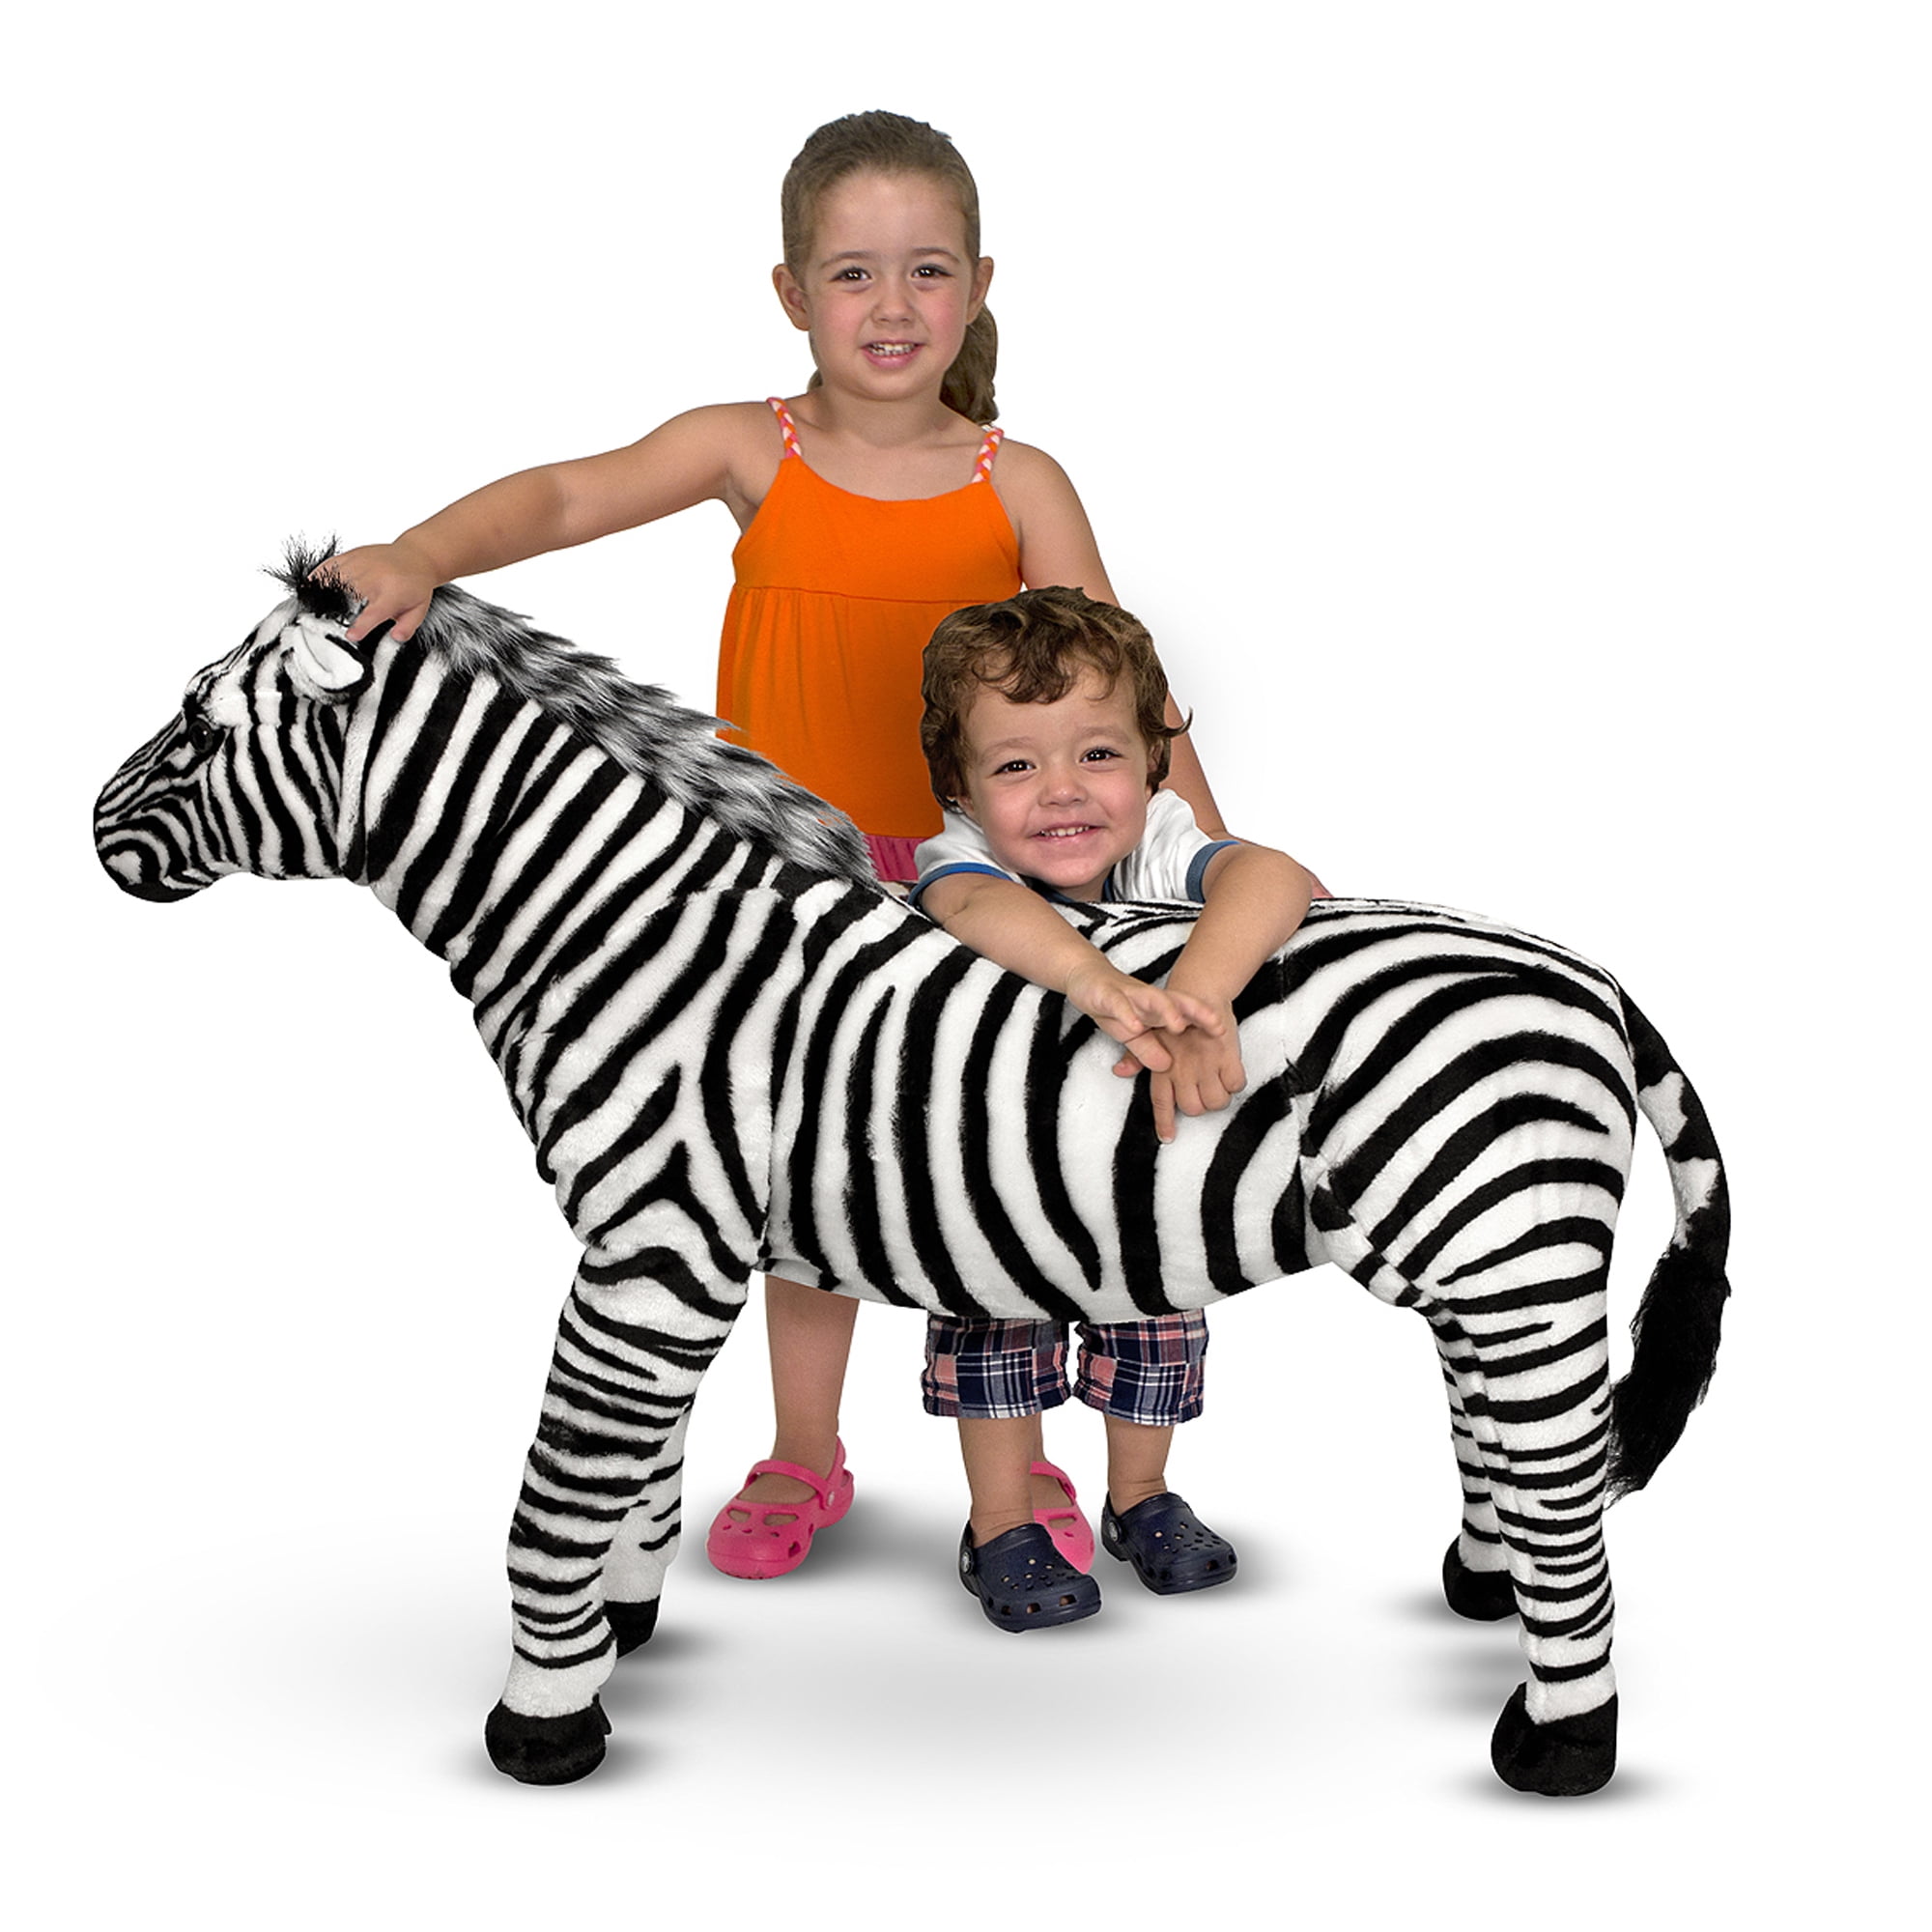 Details about   Zebra Simulation Soft Giant Hung Big Lifelike Toy Doll Plush Stuffed Animal Gift 